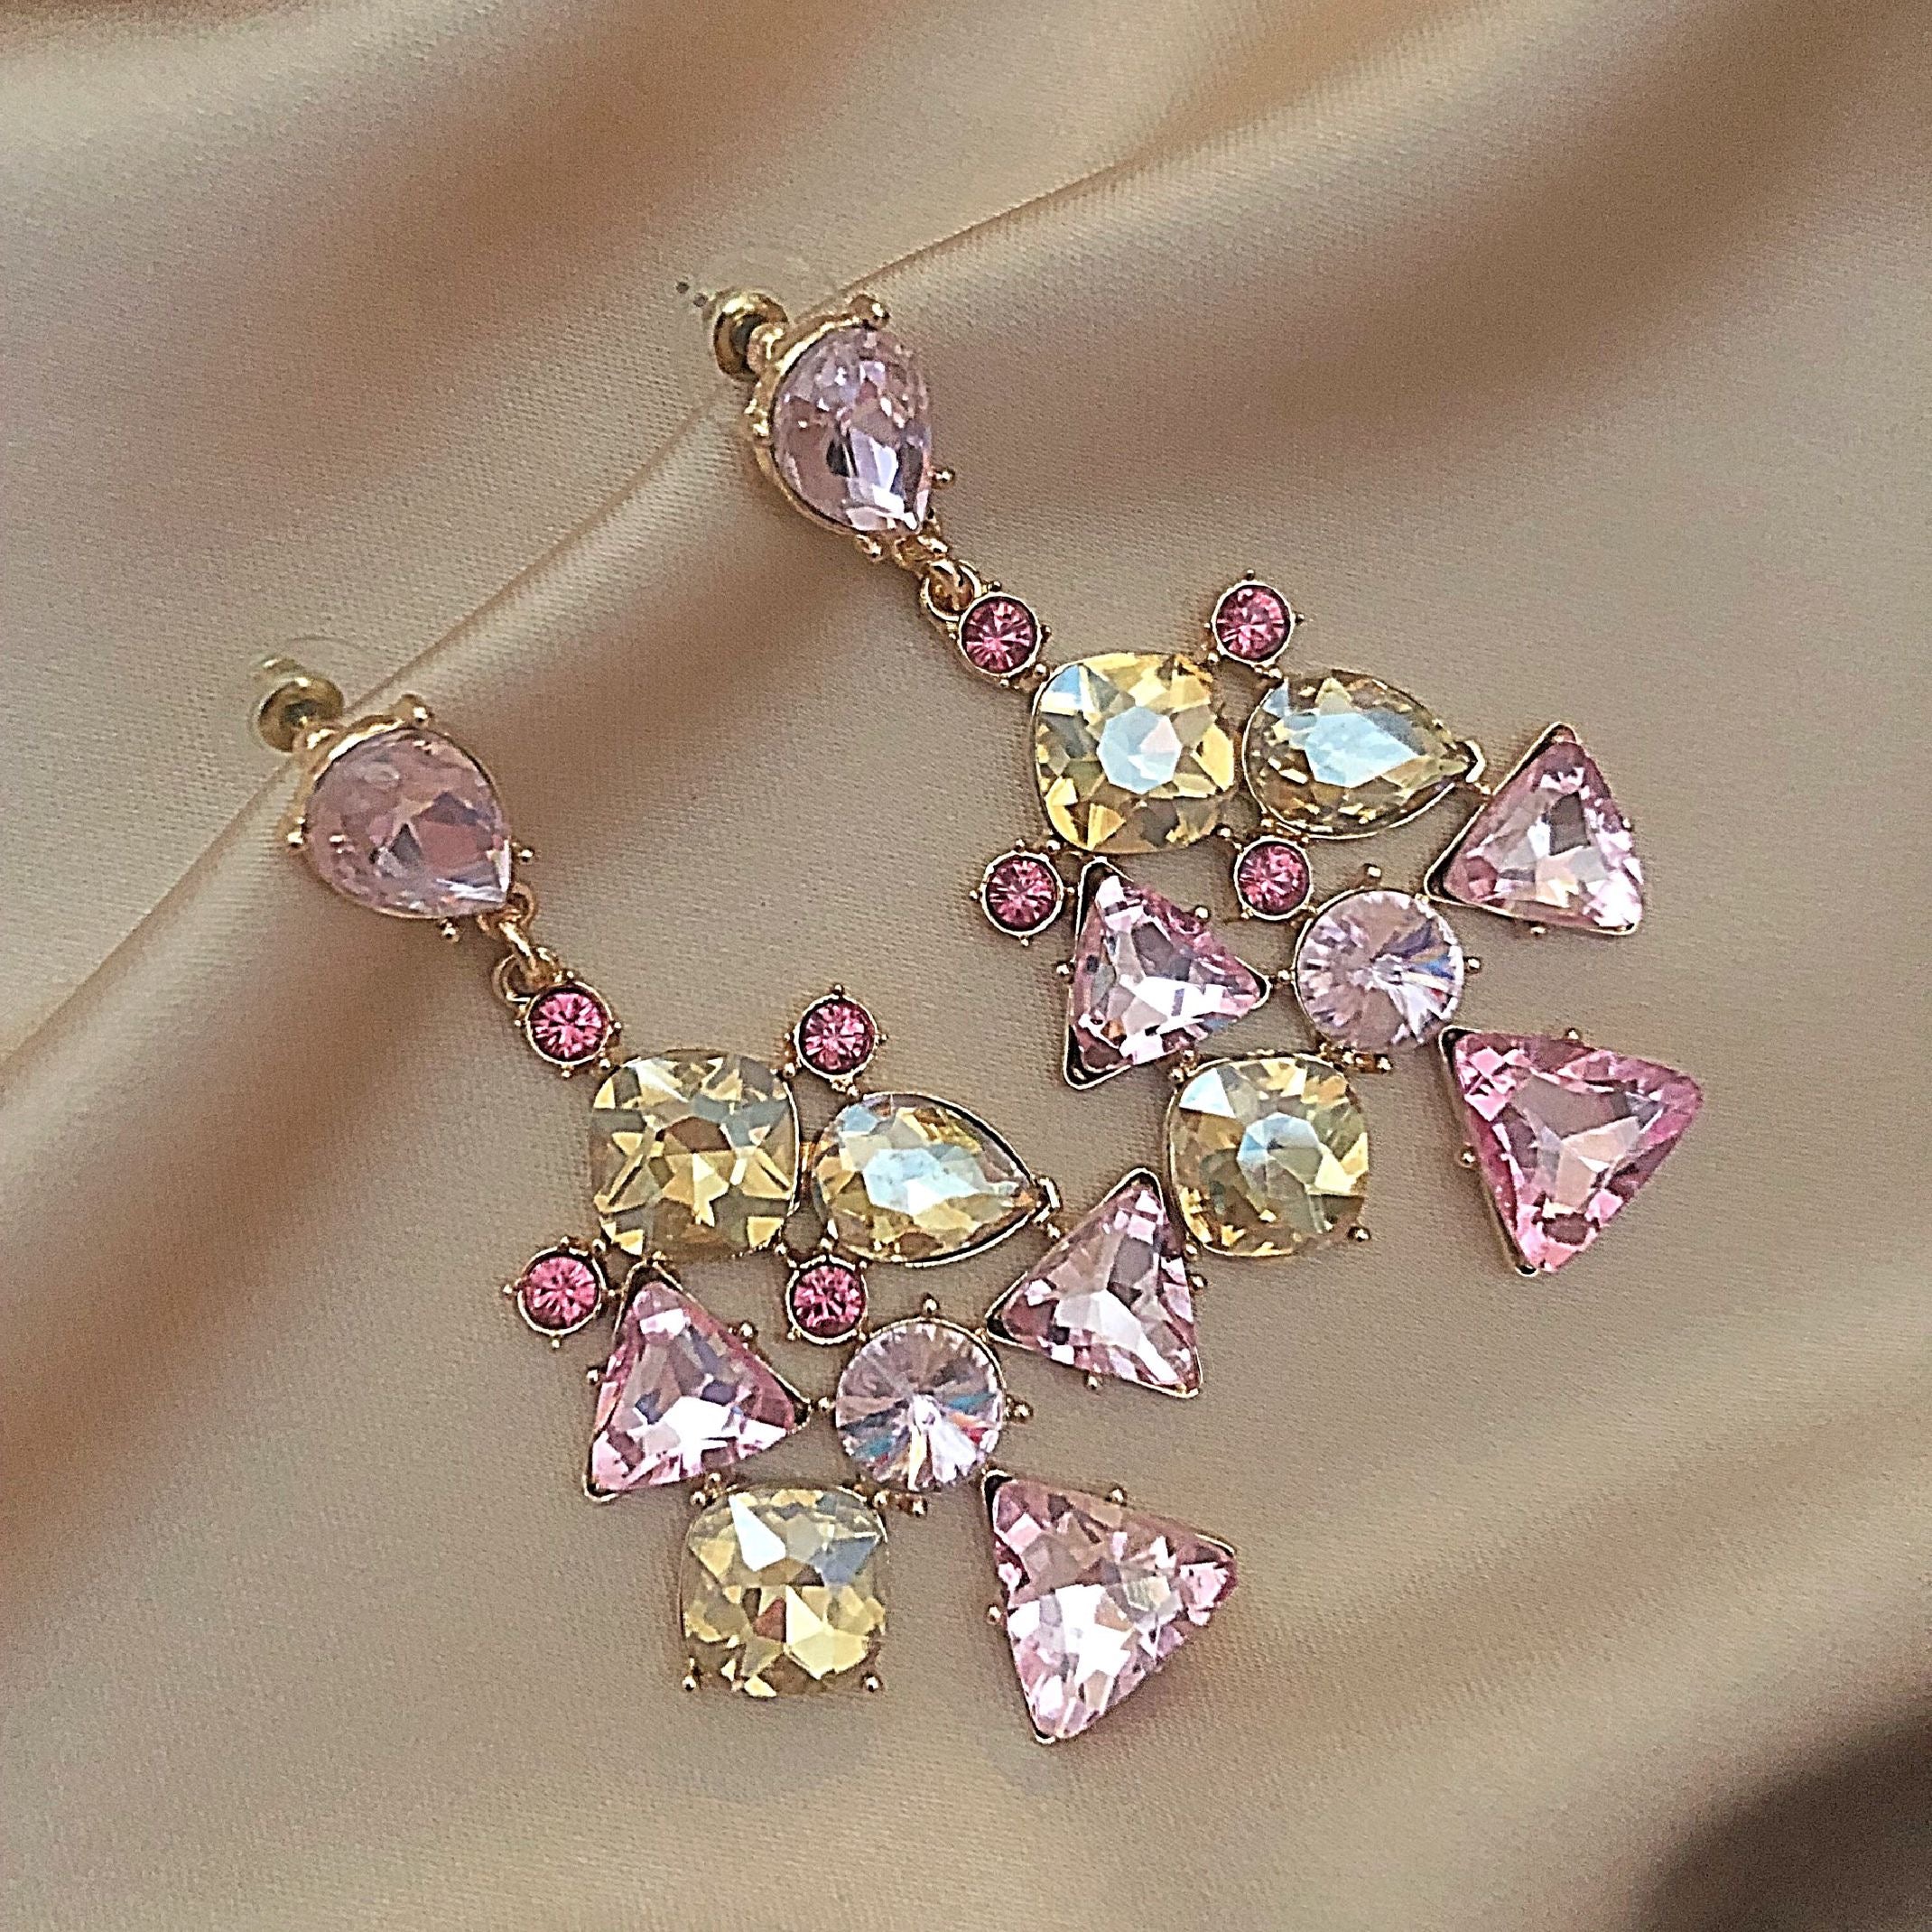 Pink and yellow jewel earrings